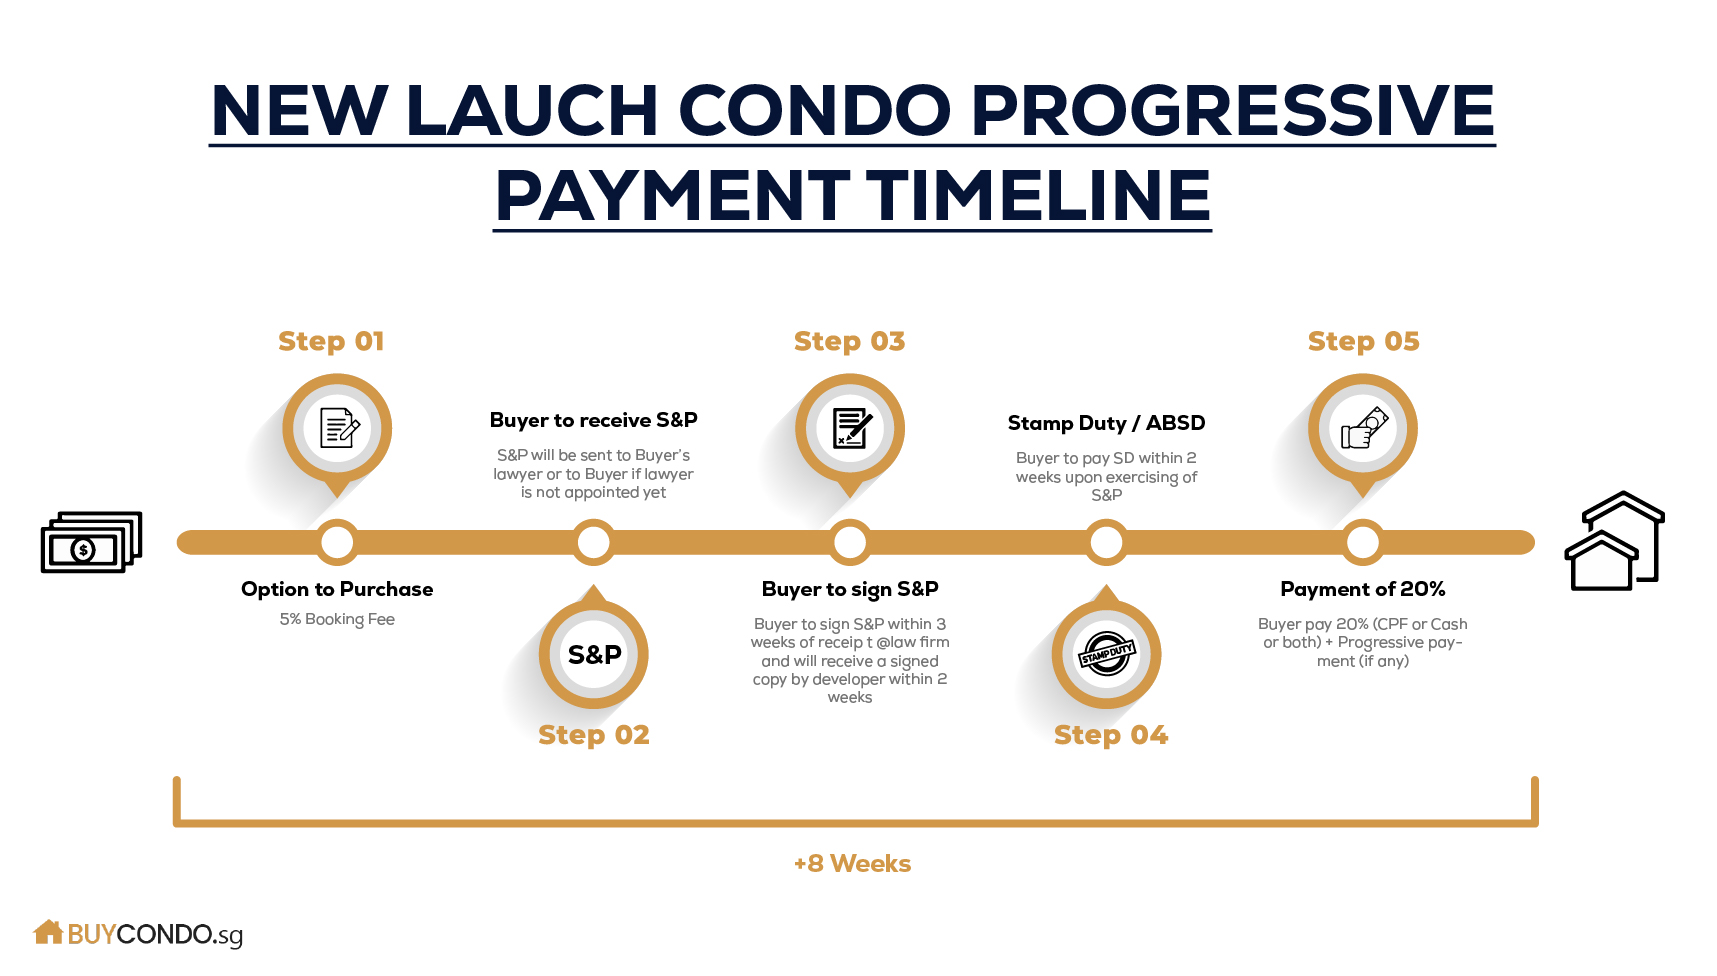 New Launch Condo Progressive Payment Timeline